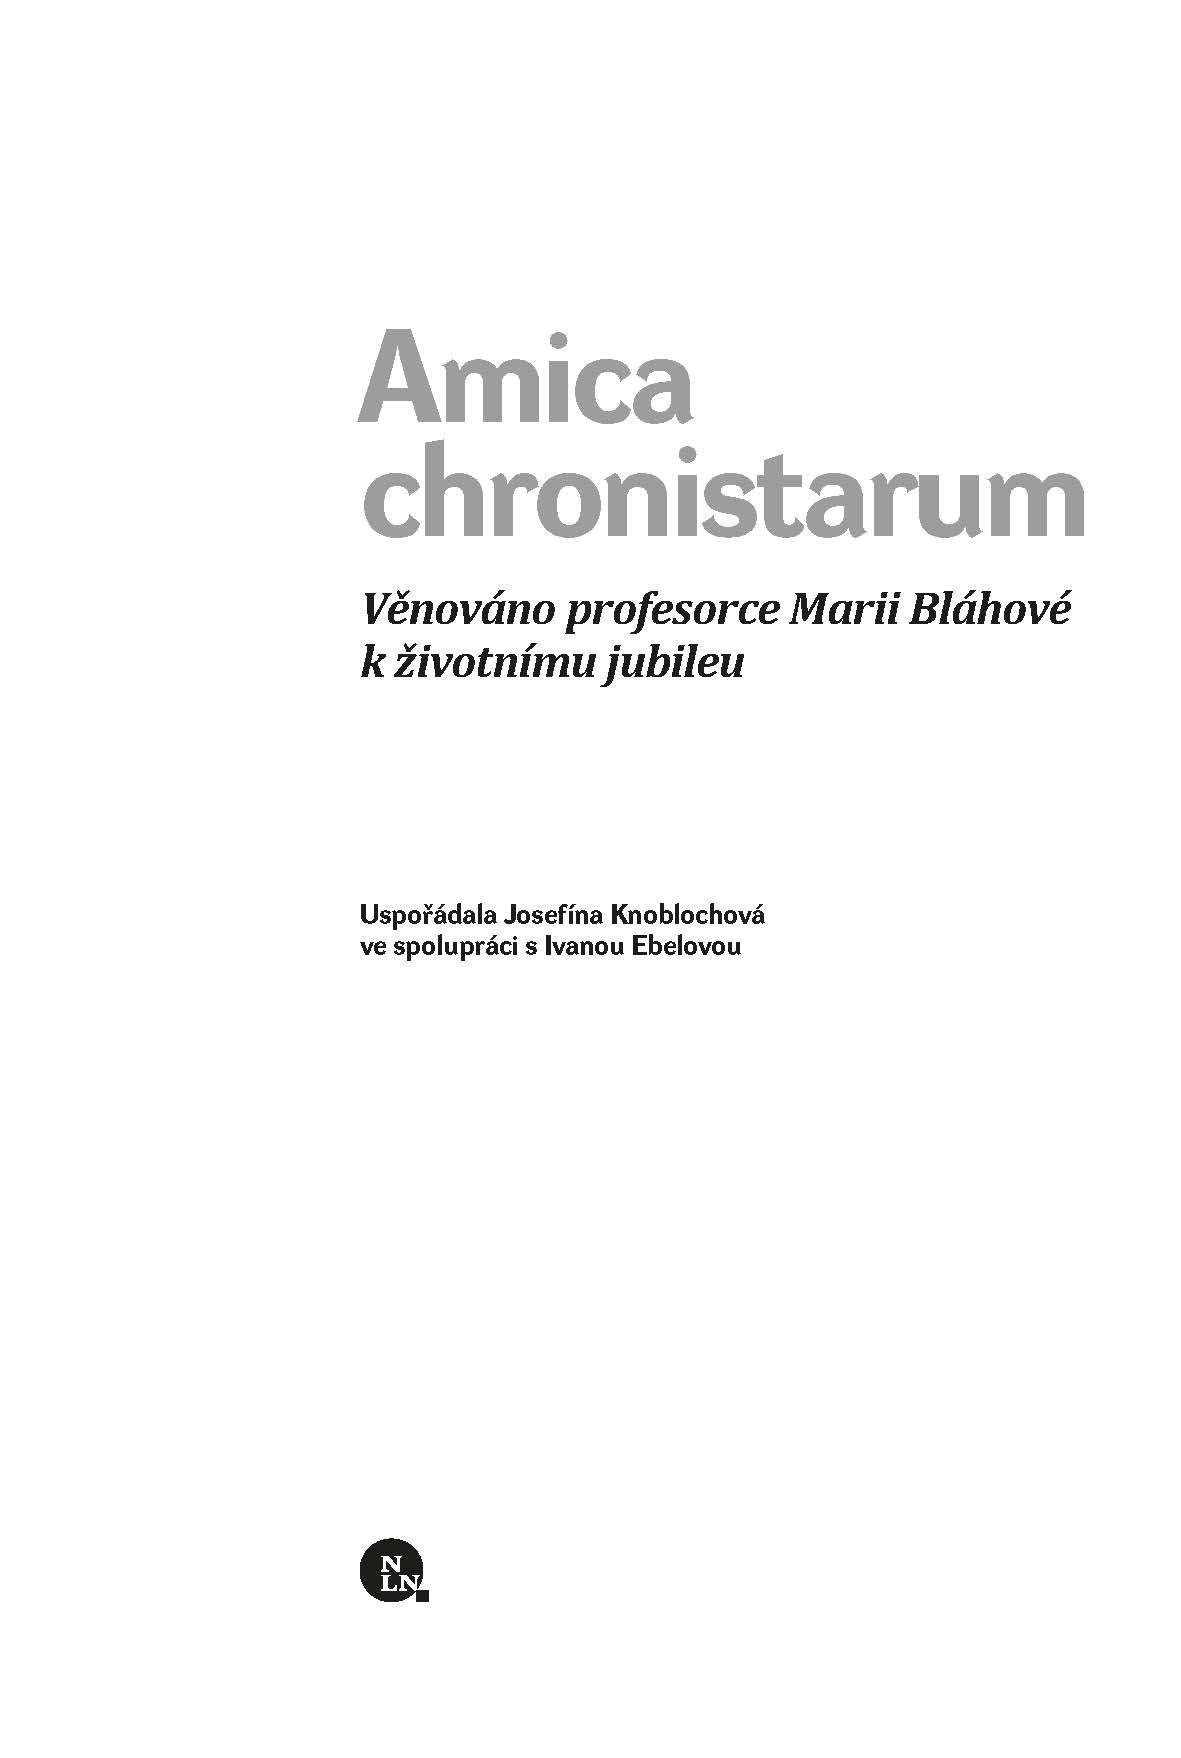 Amica chronistarum ukázka-1